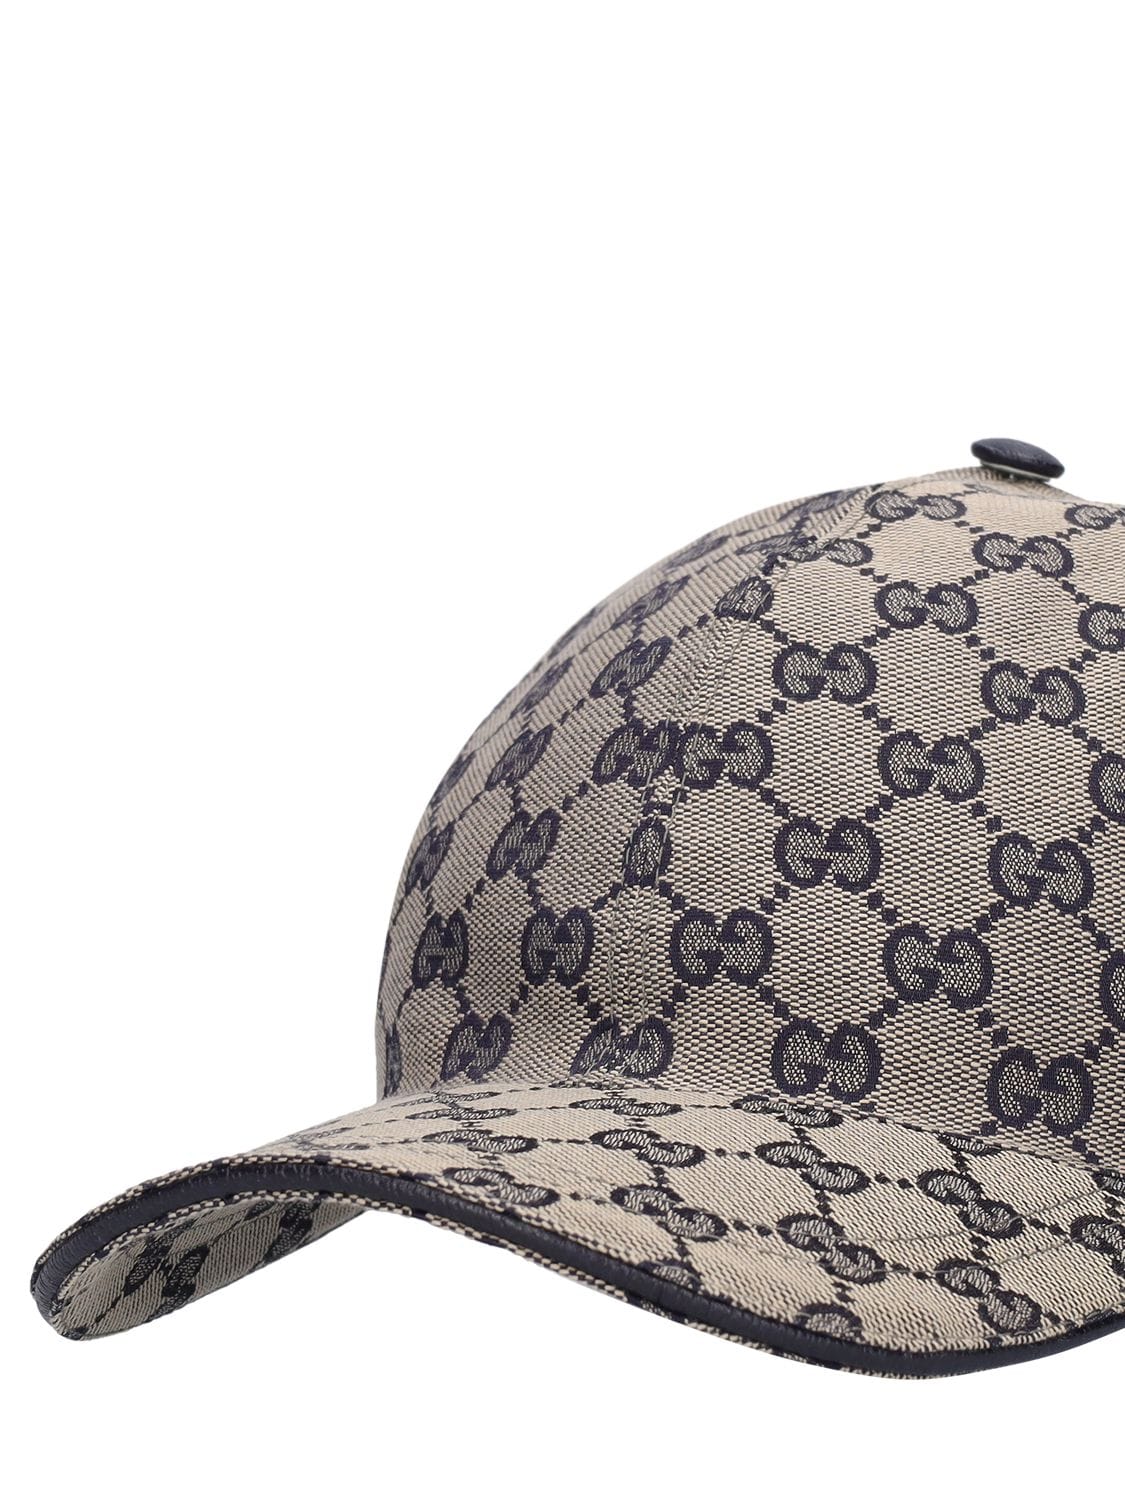 Gucci Baseball Cap Khaki Adjustable canvas Monogram Hat Unisex